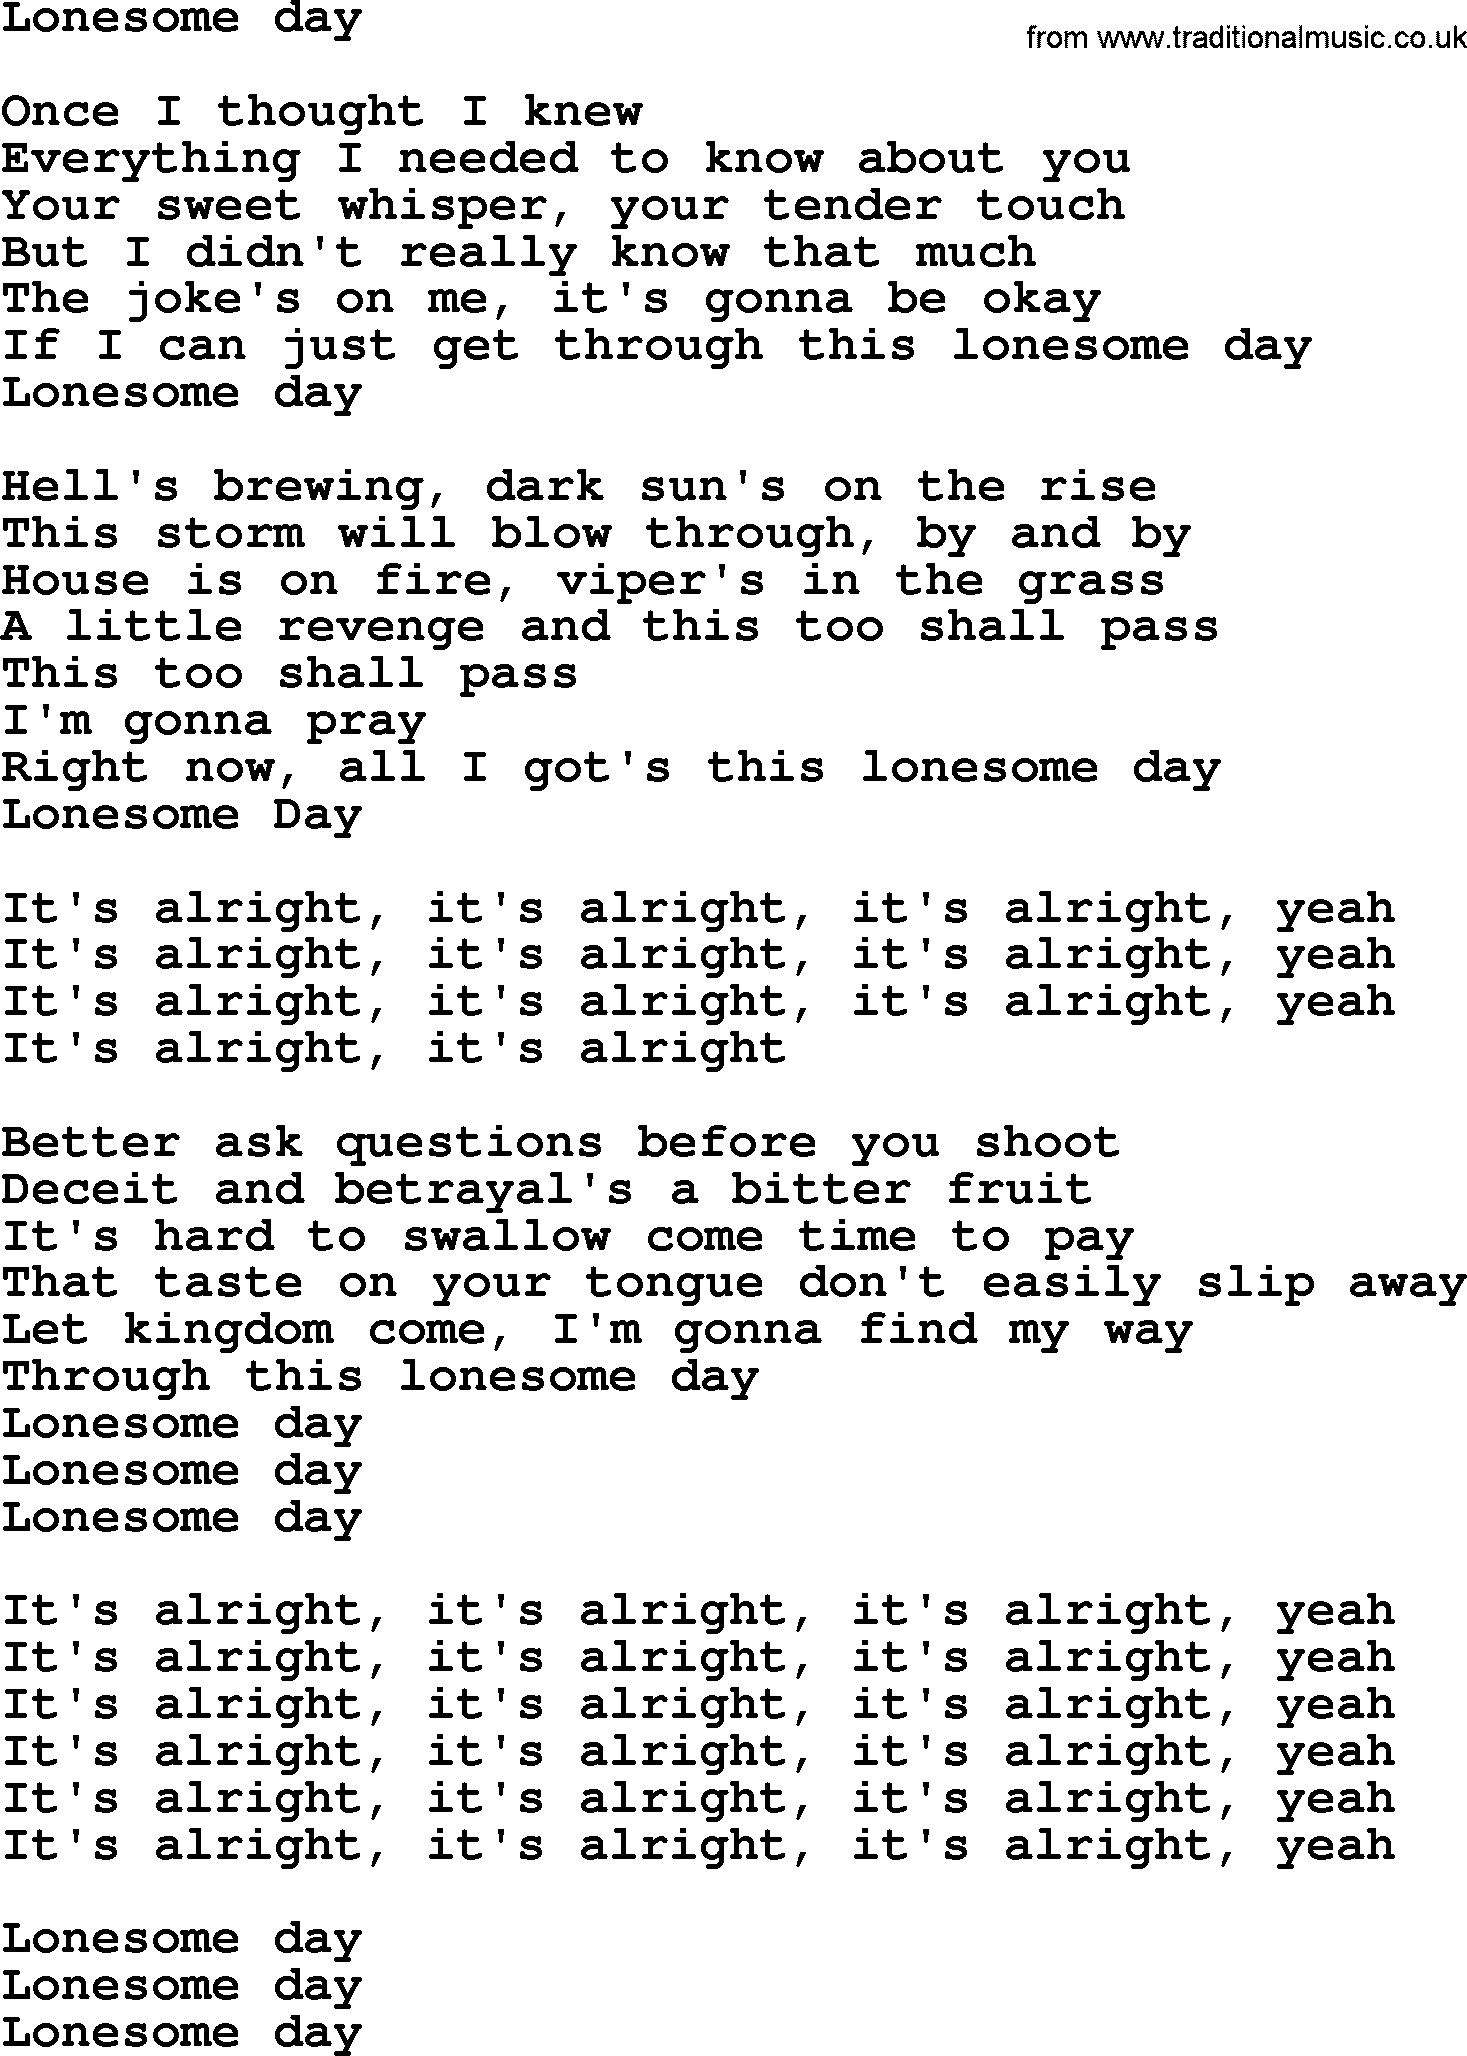 Bruce Springsteen song: Lonesome Day lyrics